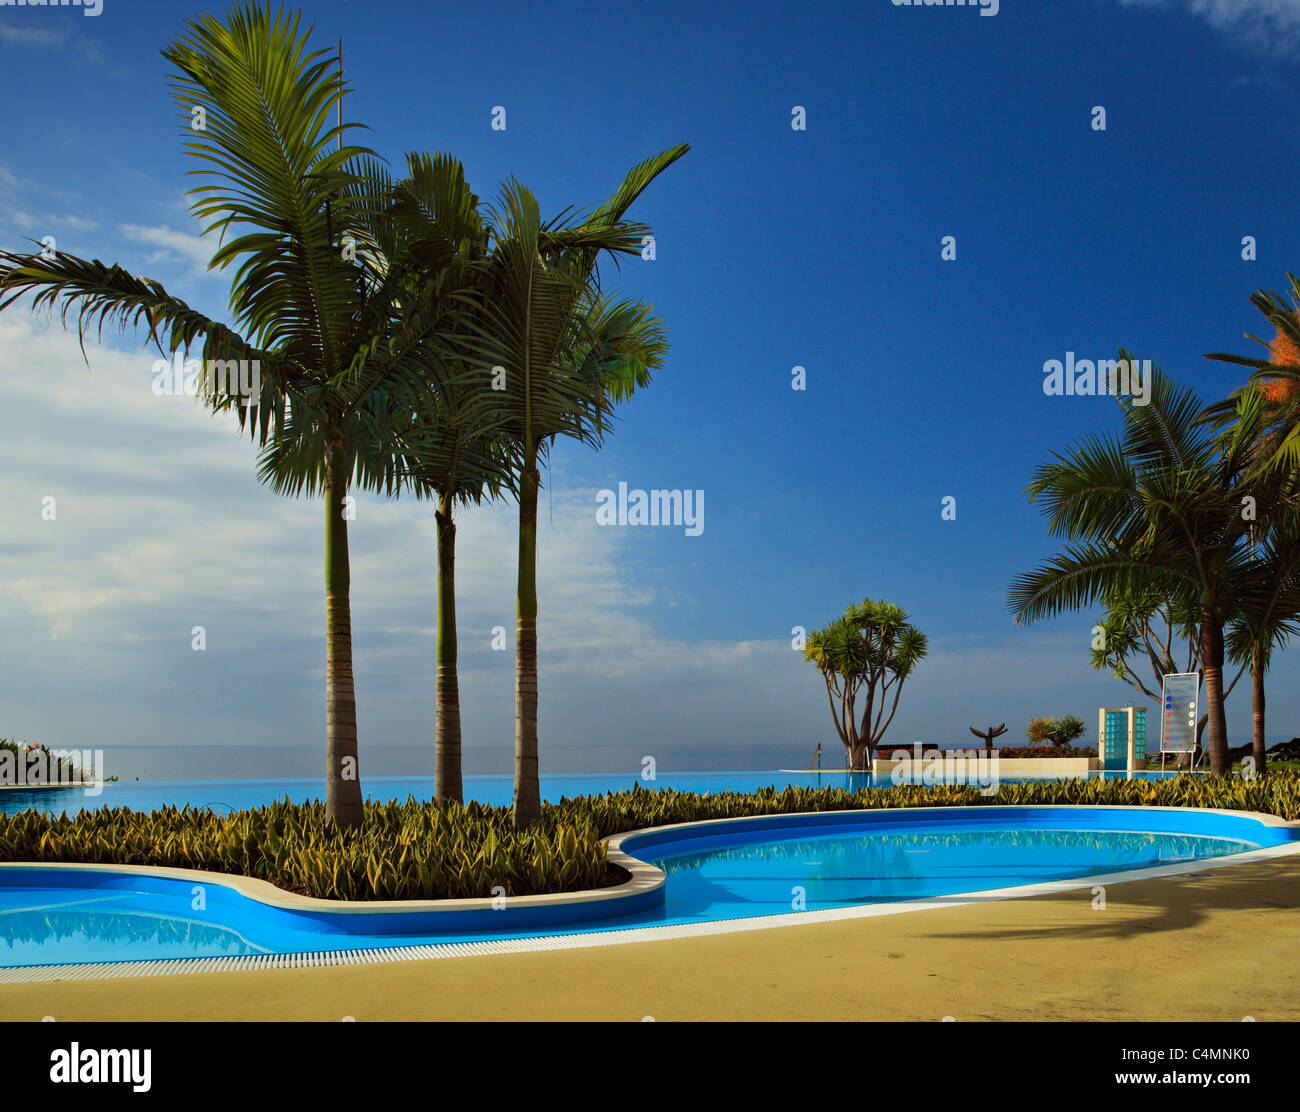 The Pestana Casino Park Hotel pool. Stock Photo